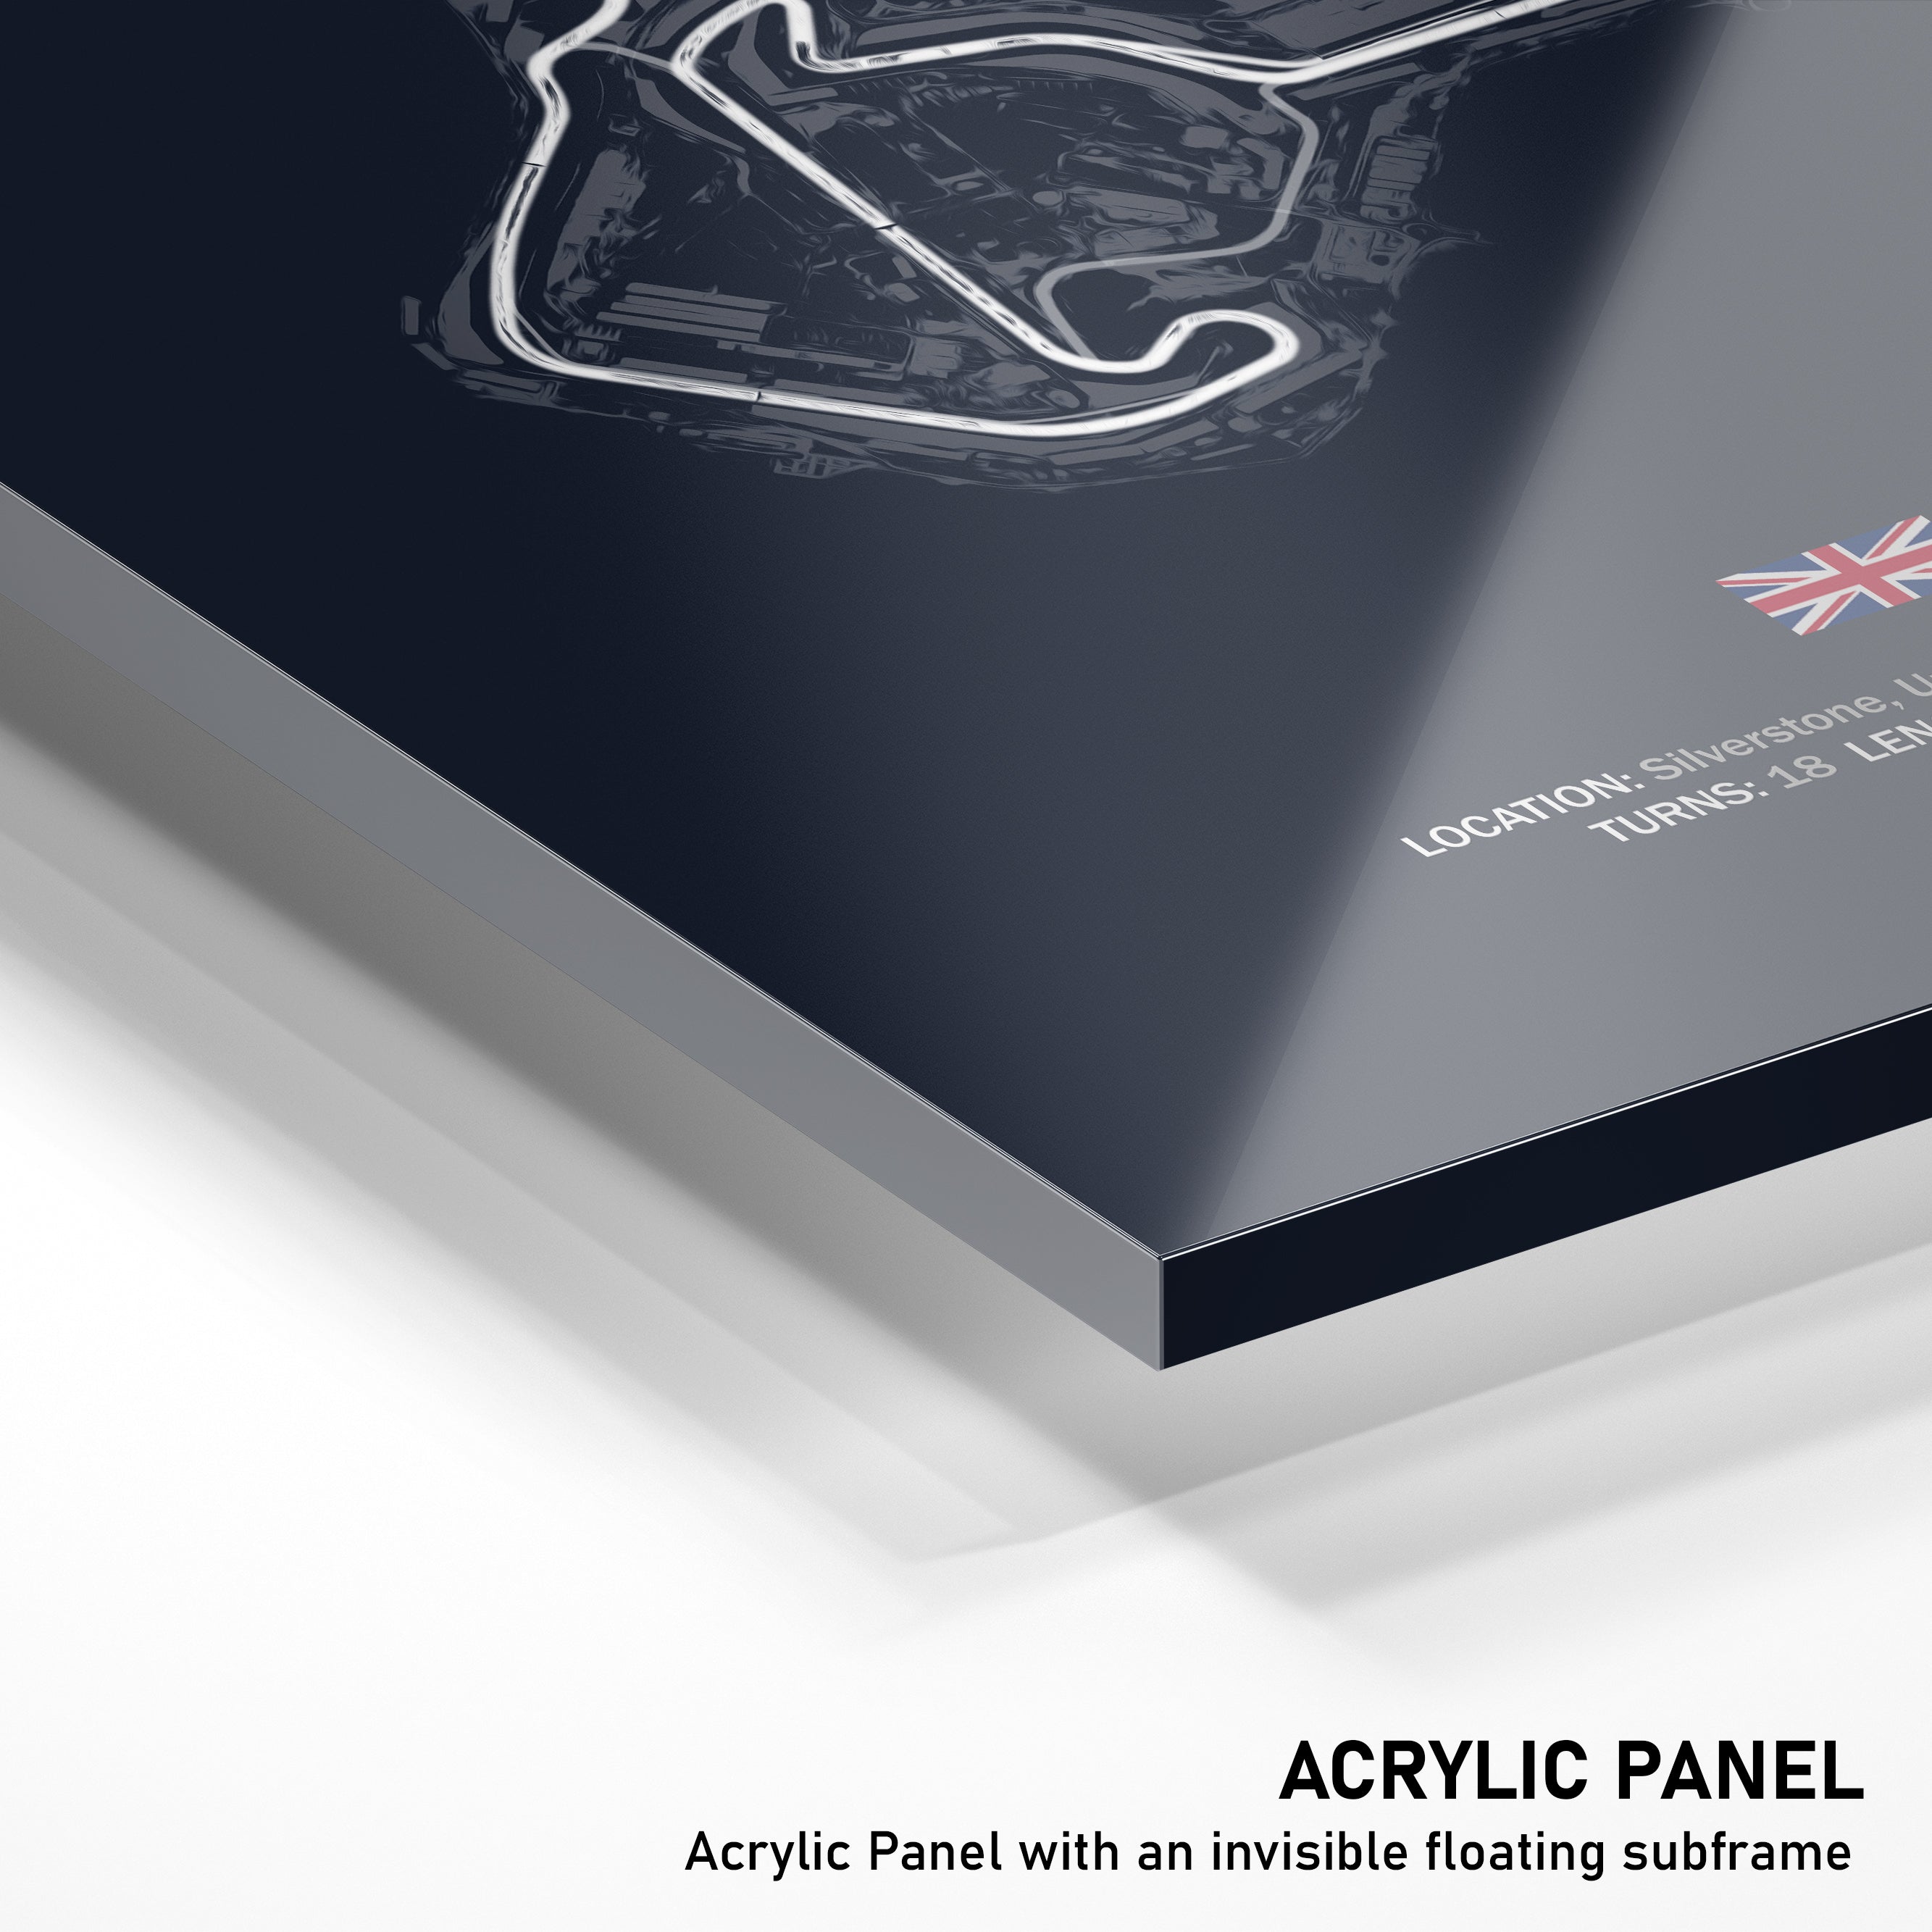 Silverstone Circuit - Racetrack Acrylic Panel Print